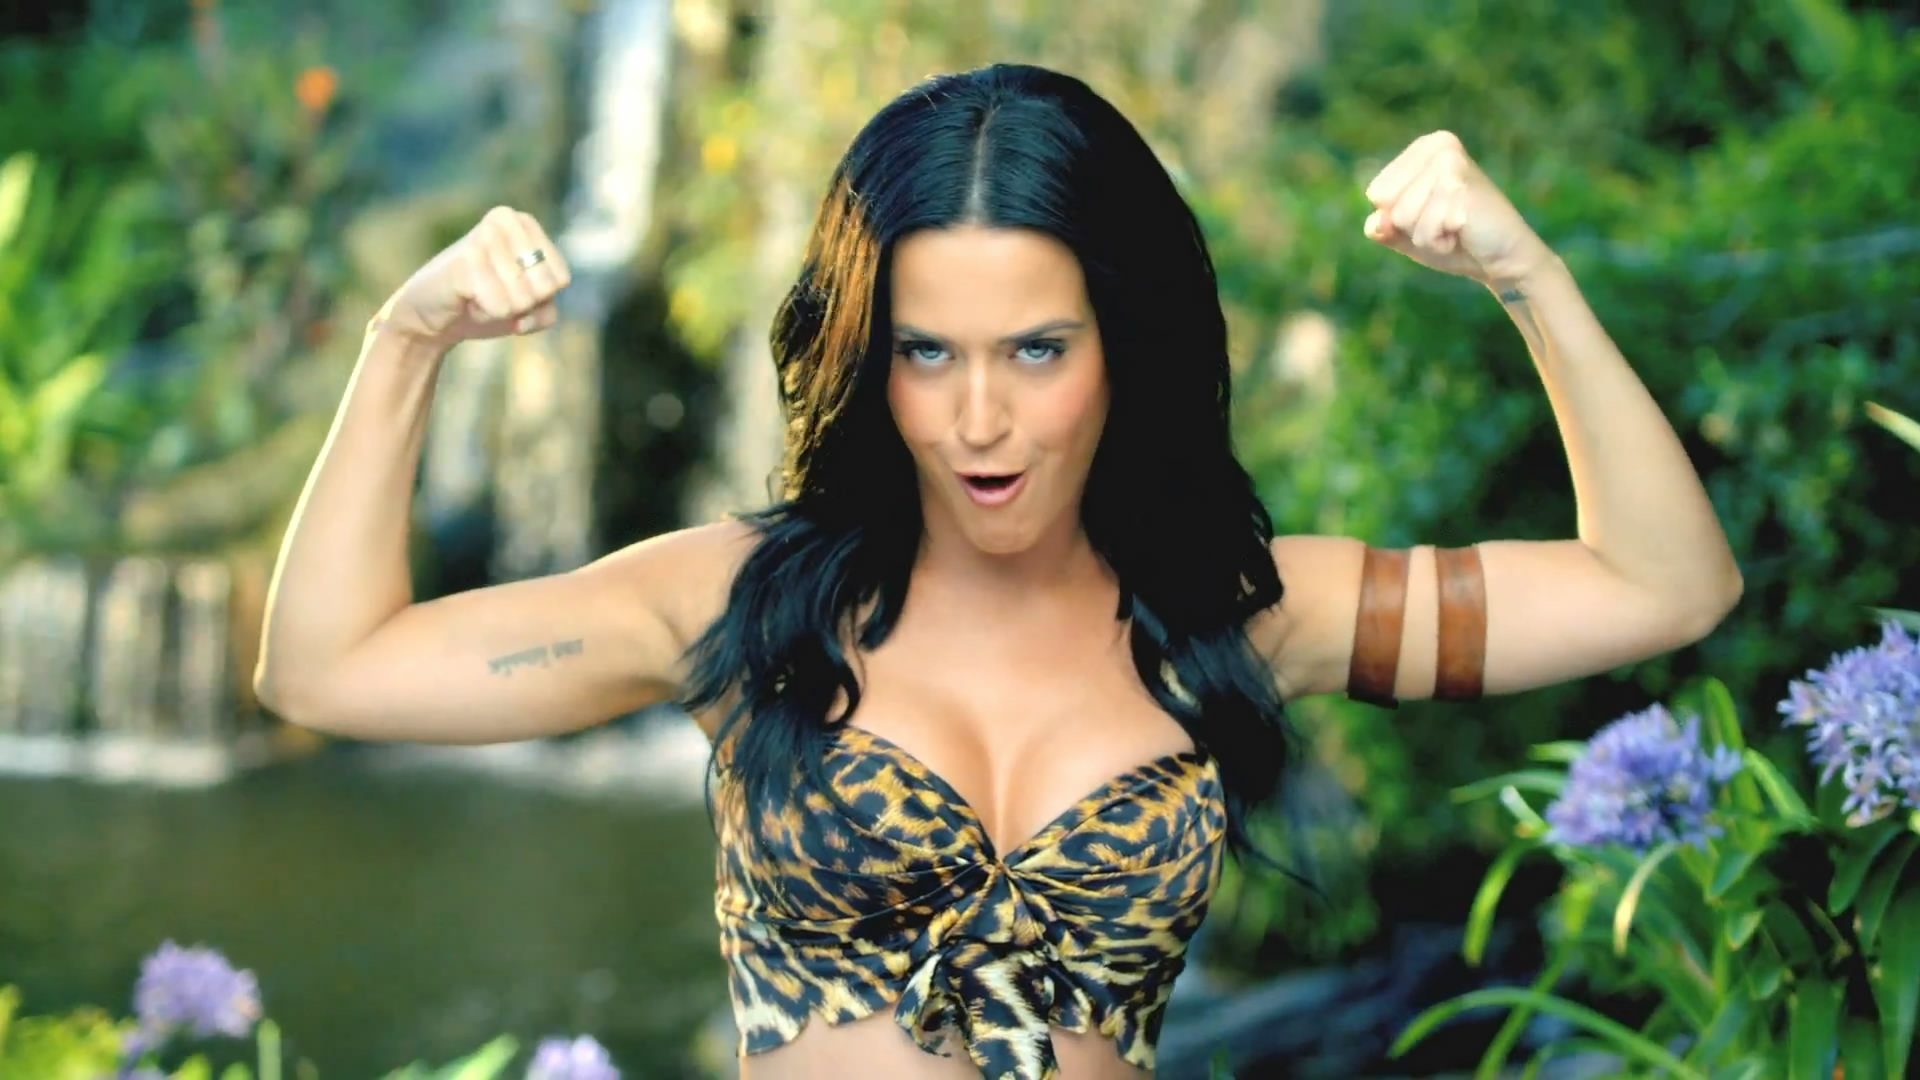 http://www.gotceleb.com/wp-content/uploads/celebrities/katy-perry/roar-music-video-hd/Katy-Perry-Roar-Music-Video-HD--01.jpg